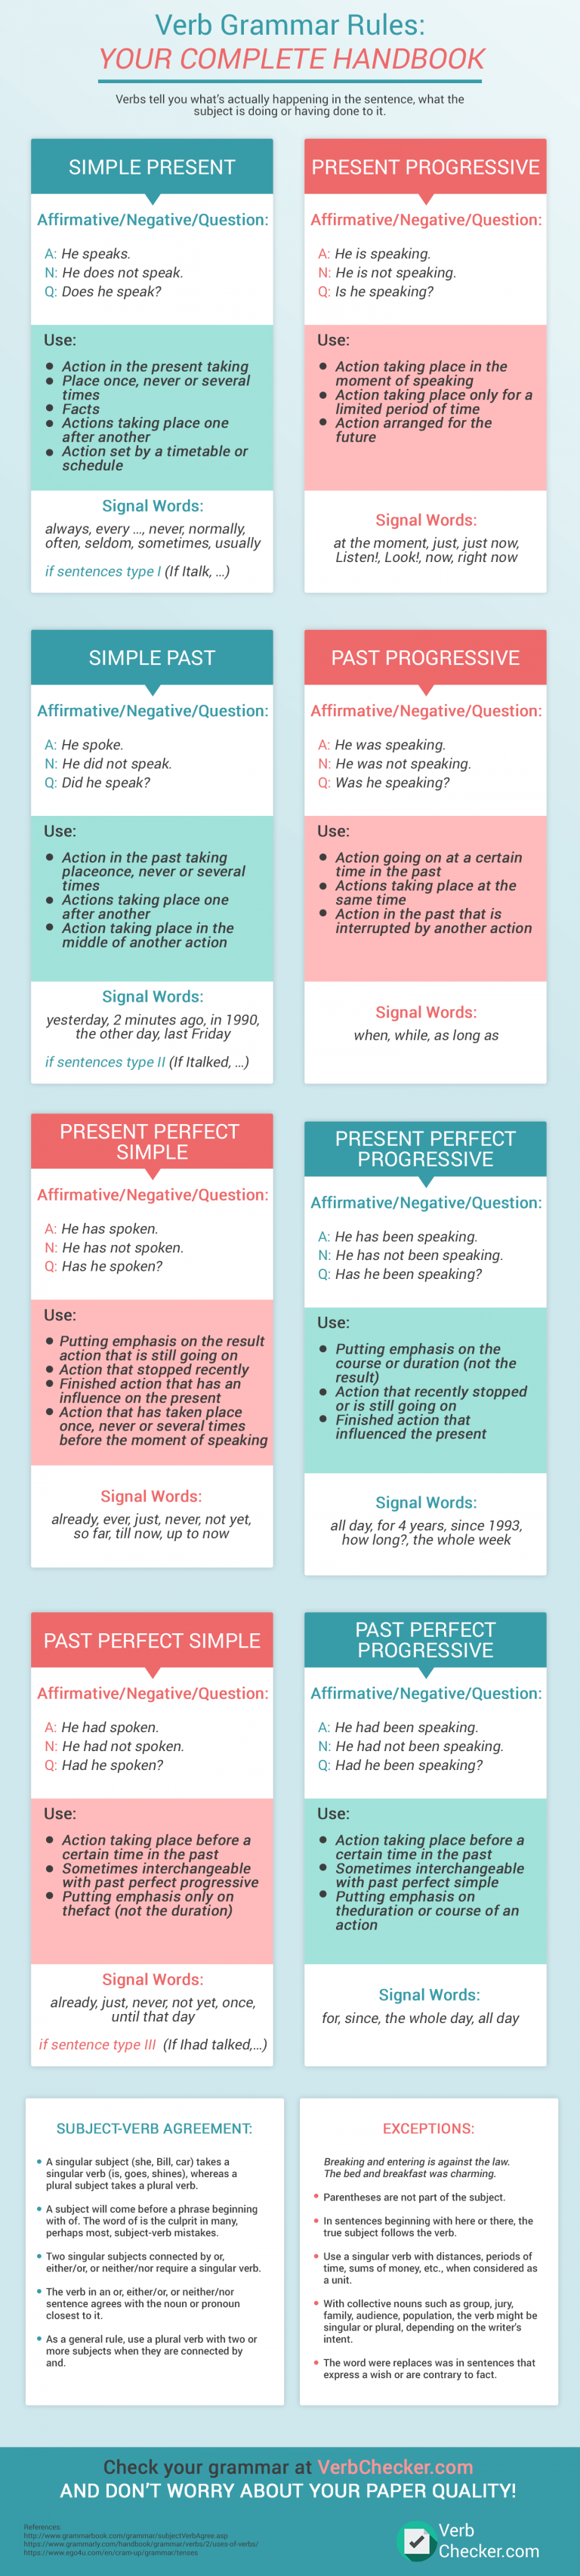 verb-grammar-rules-your-complete-handbook-infographic-portal